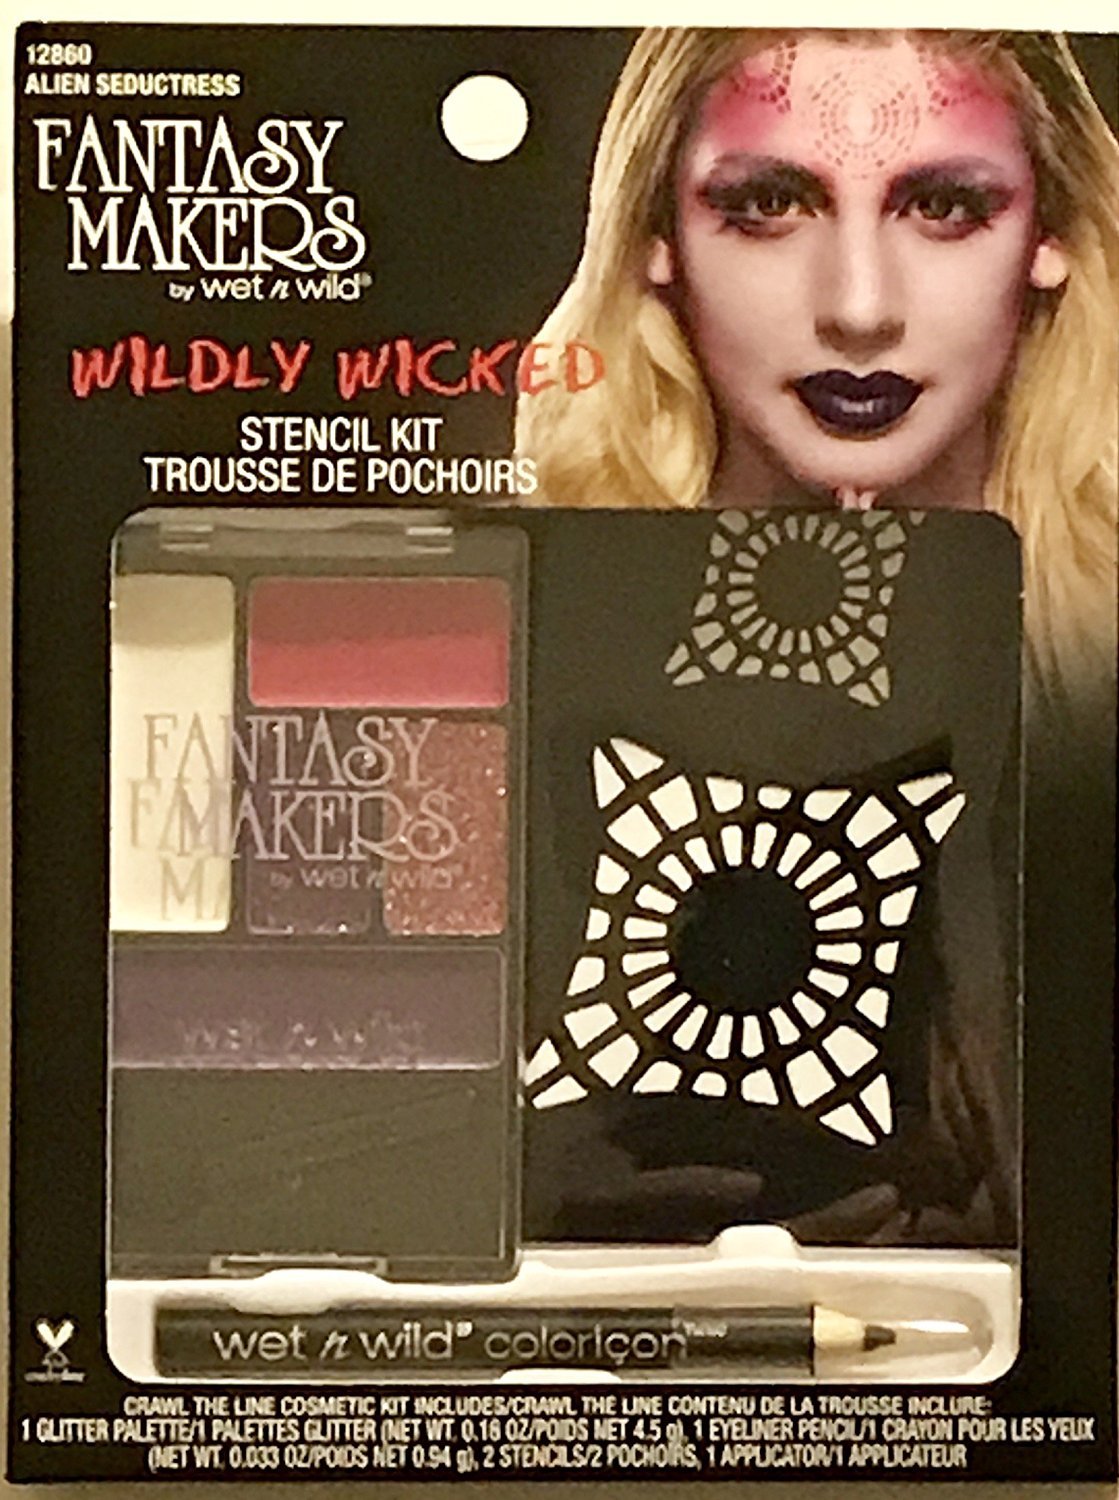 Wet n Wild Fantasy Makers Wildly Wicked Stencil Kit - 12860 Alien Seductress